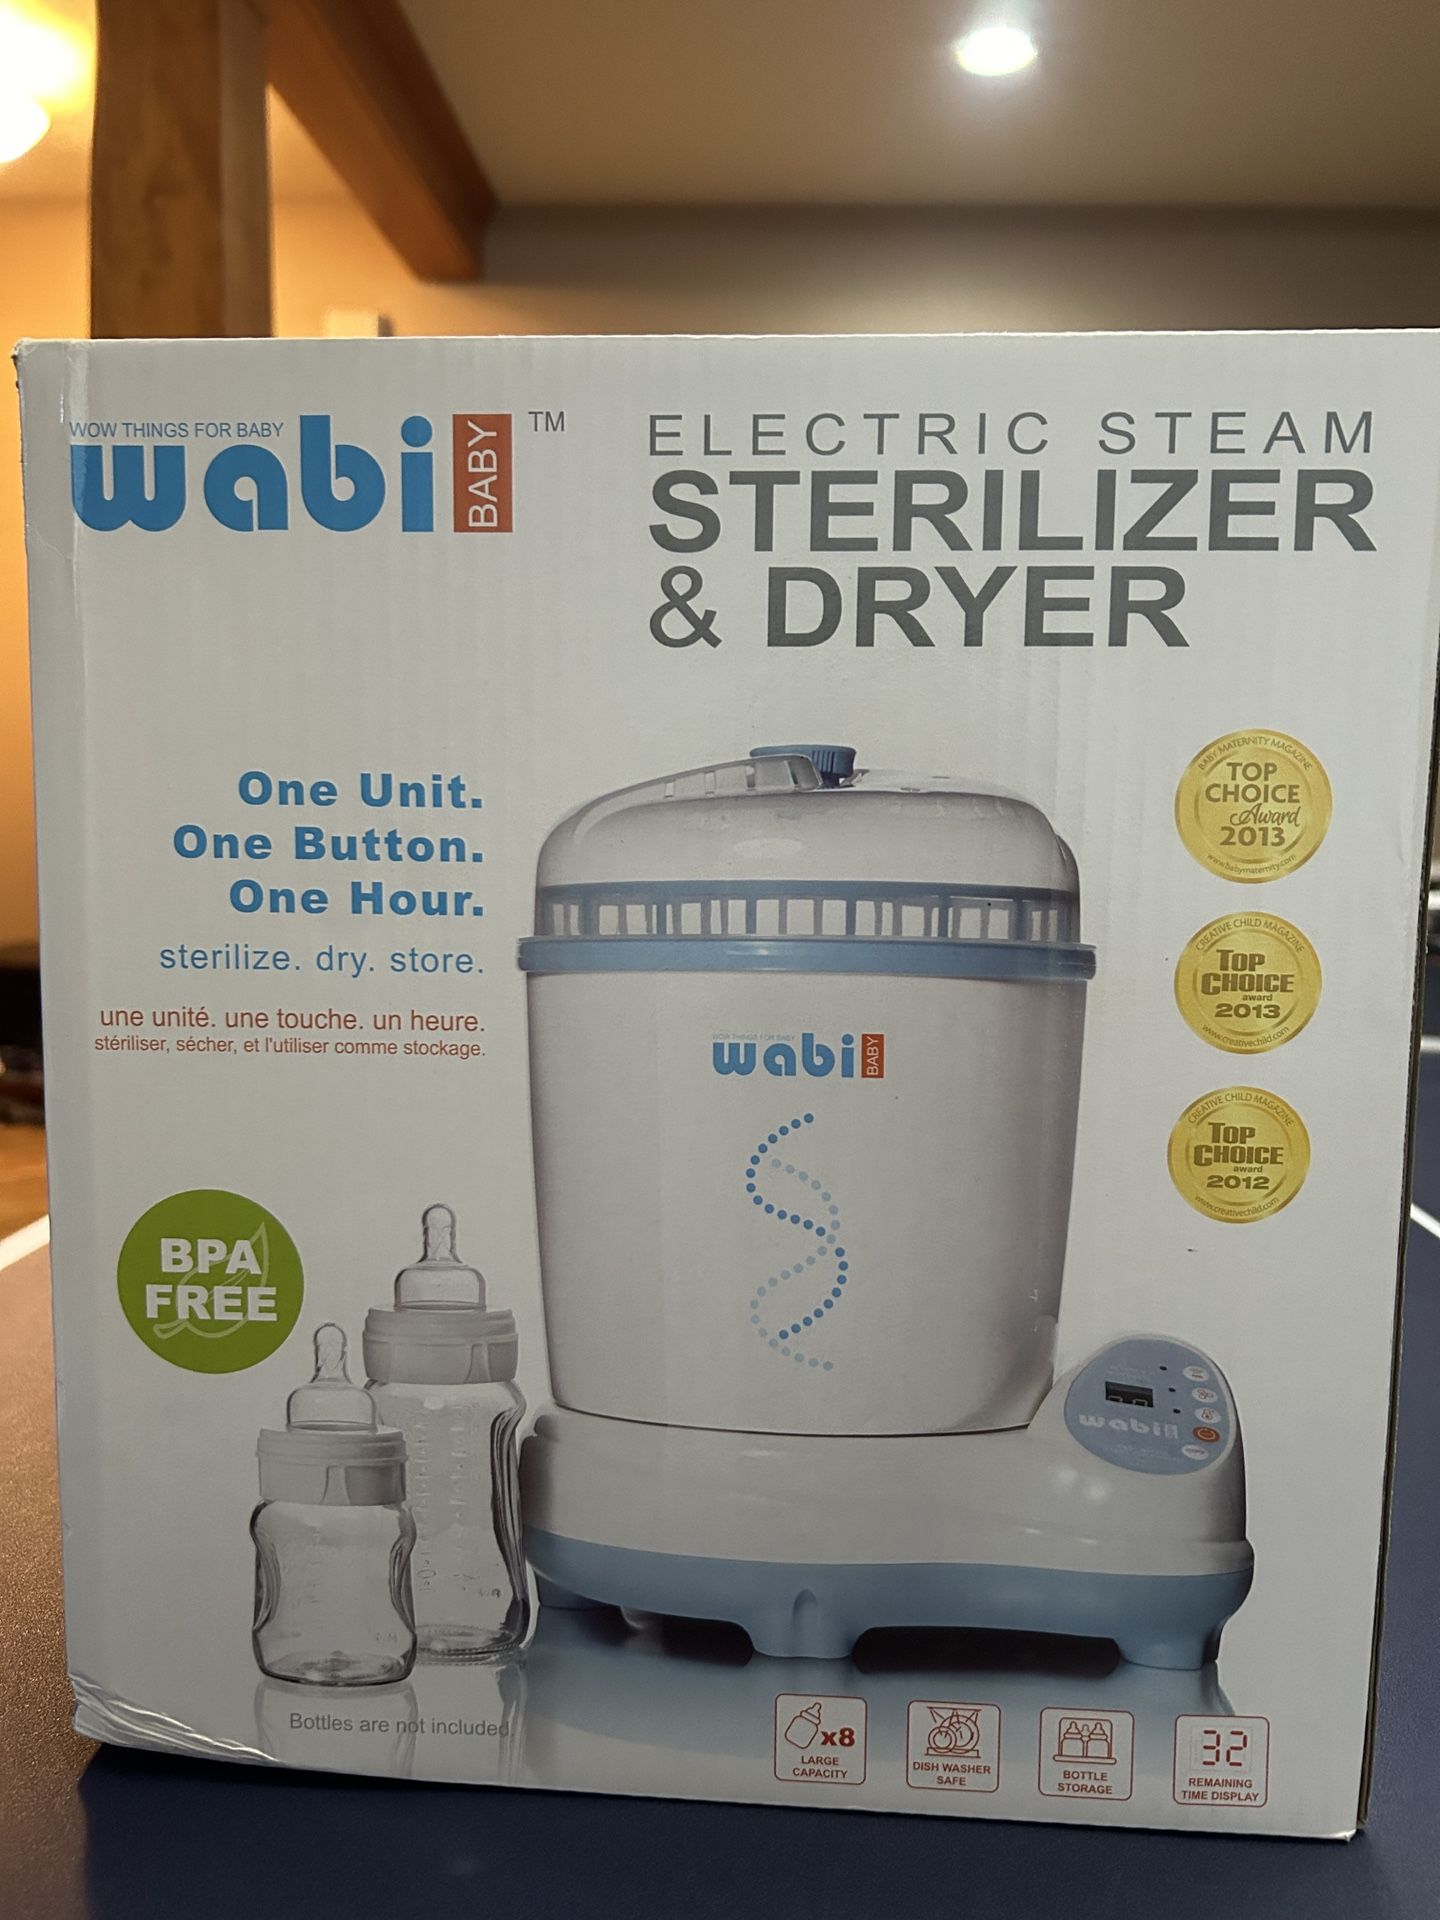 Wabi Electric Steam Sterilizer & Dryer